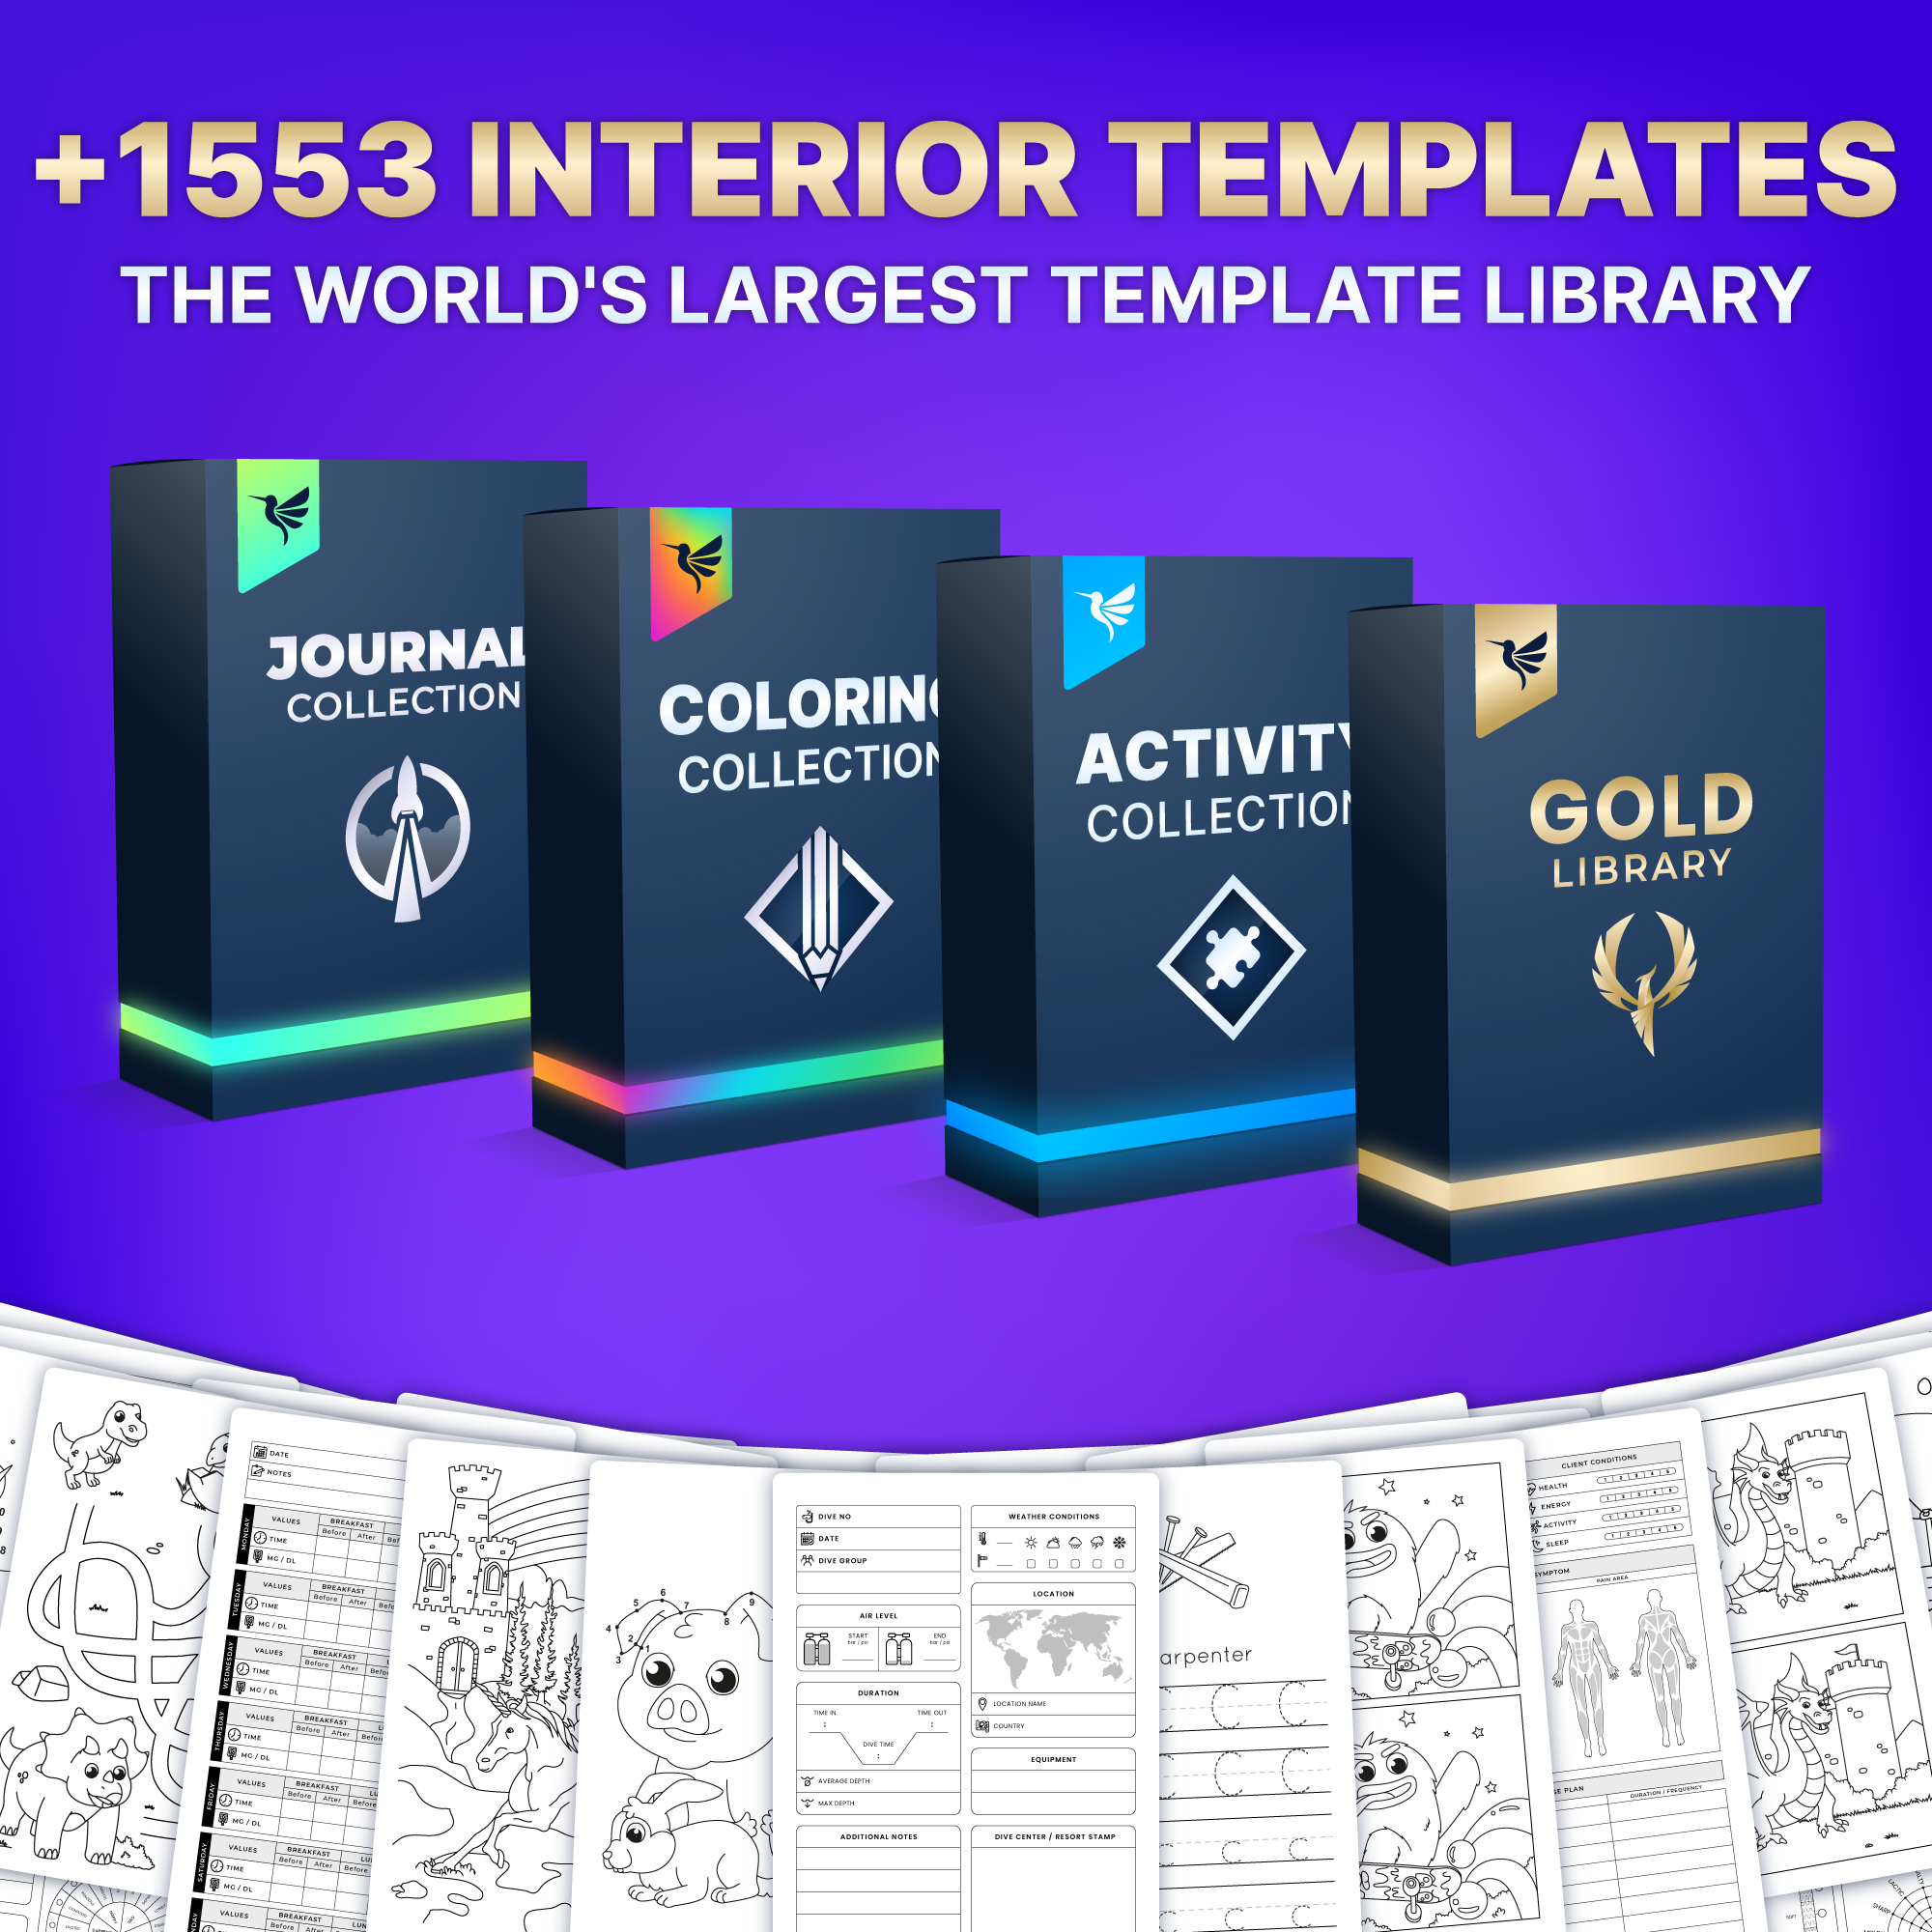 BookBird - Platinum Bundle - Over +1553 Book Interior Templates for Amazon KDP